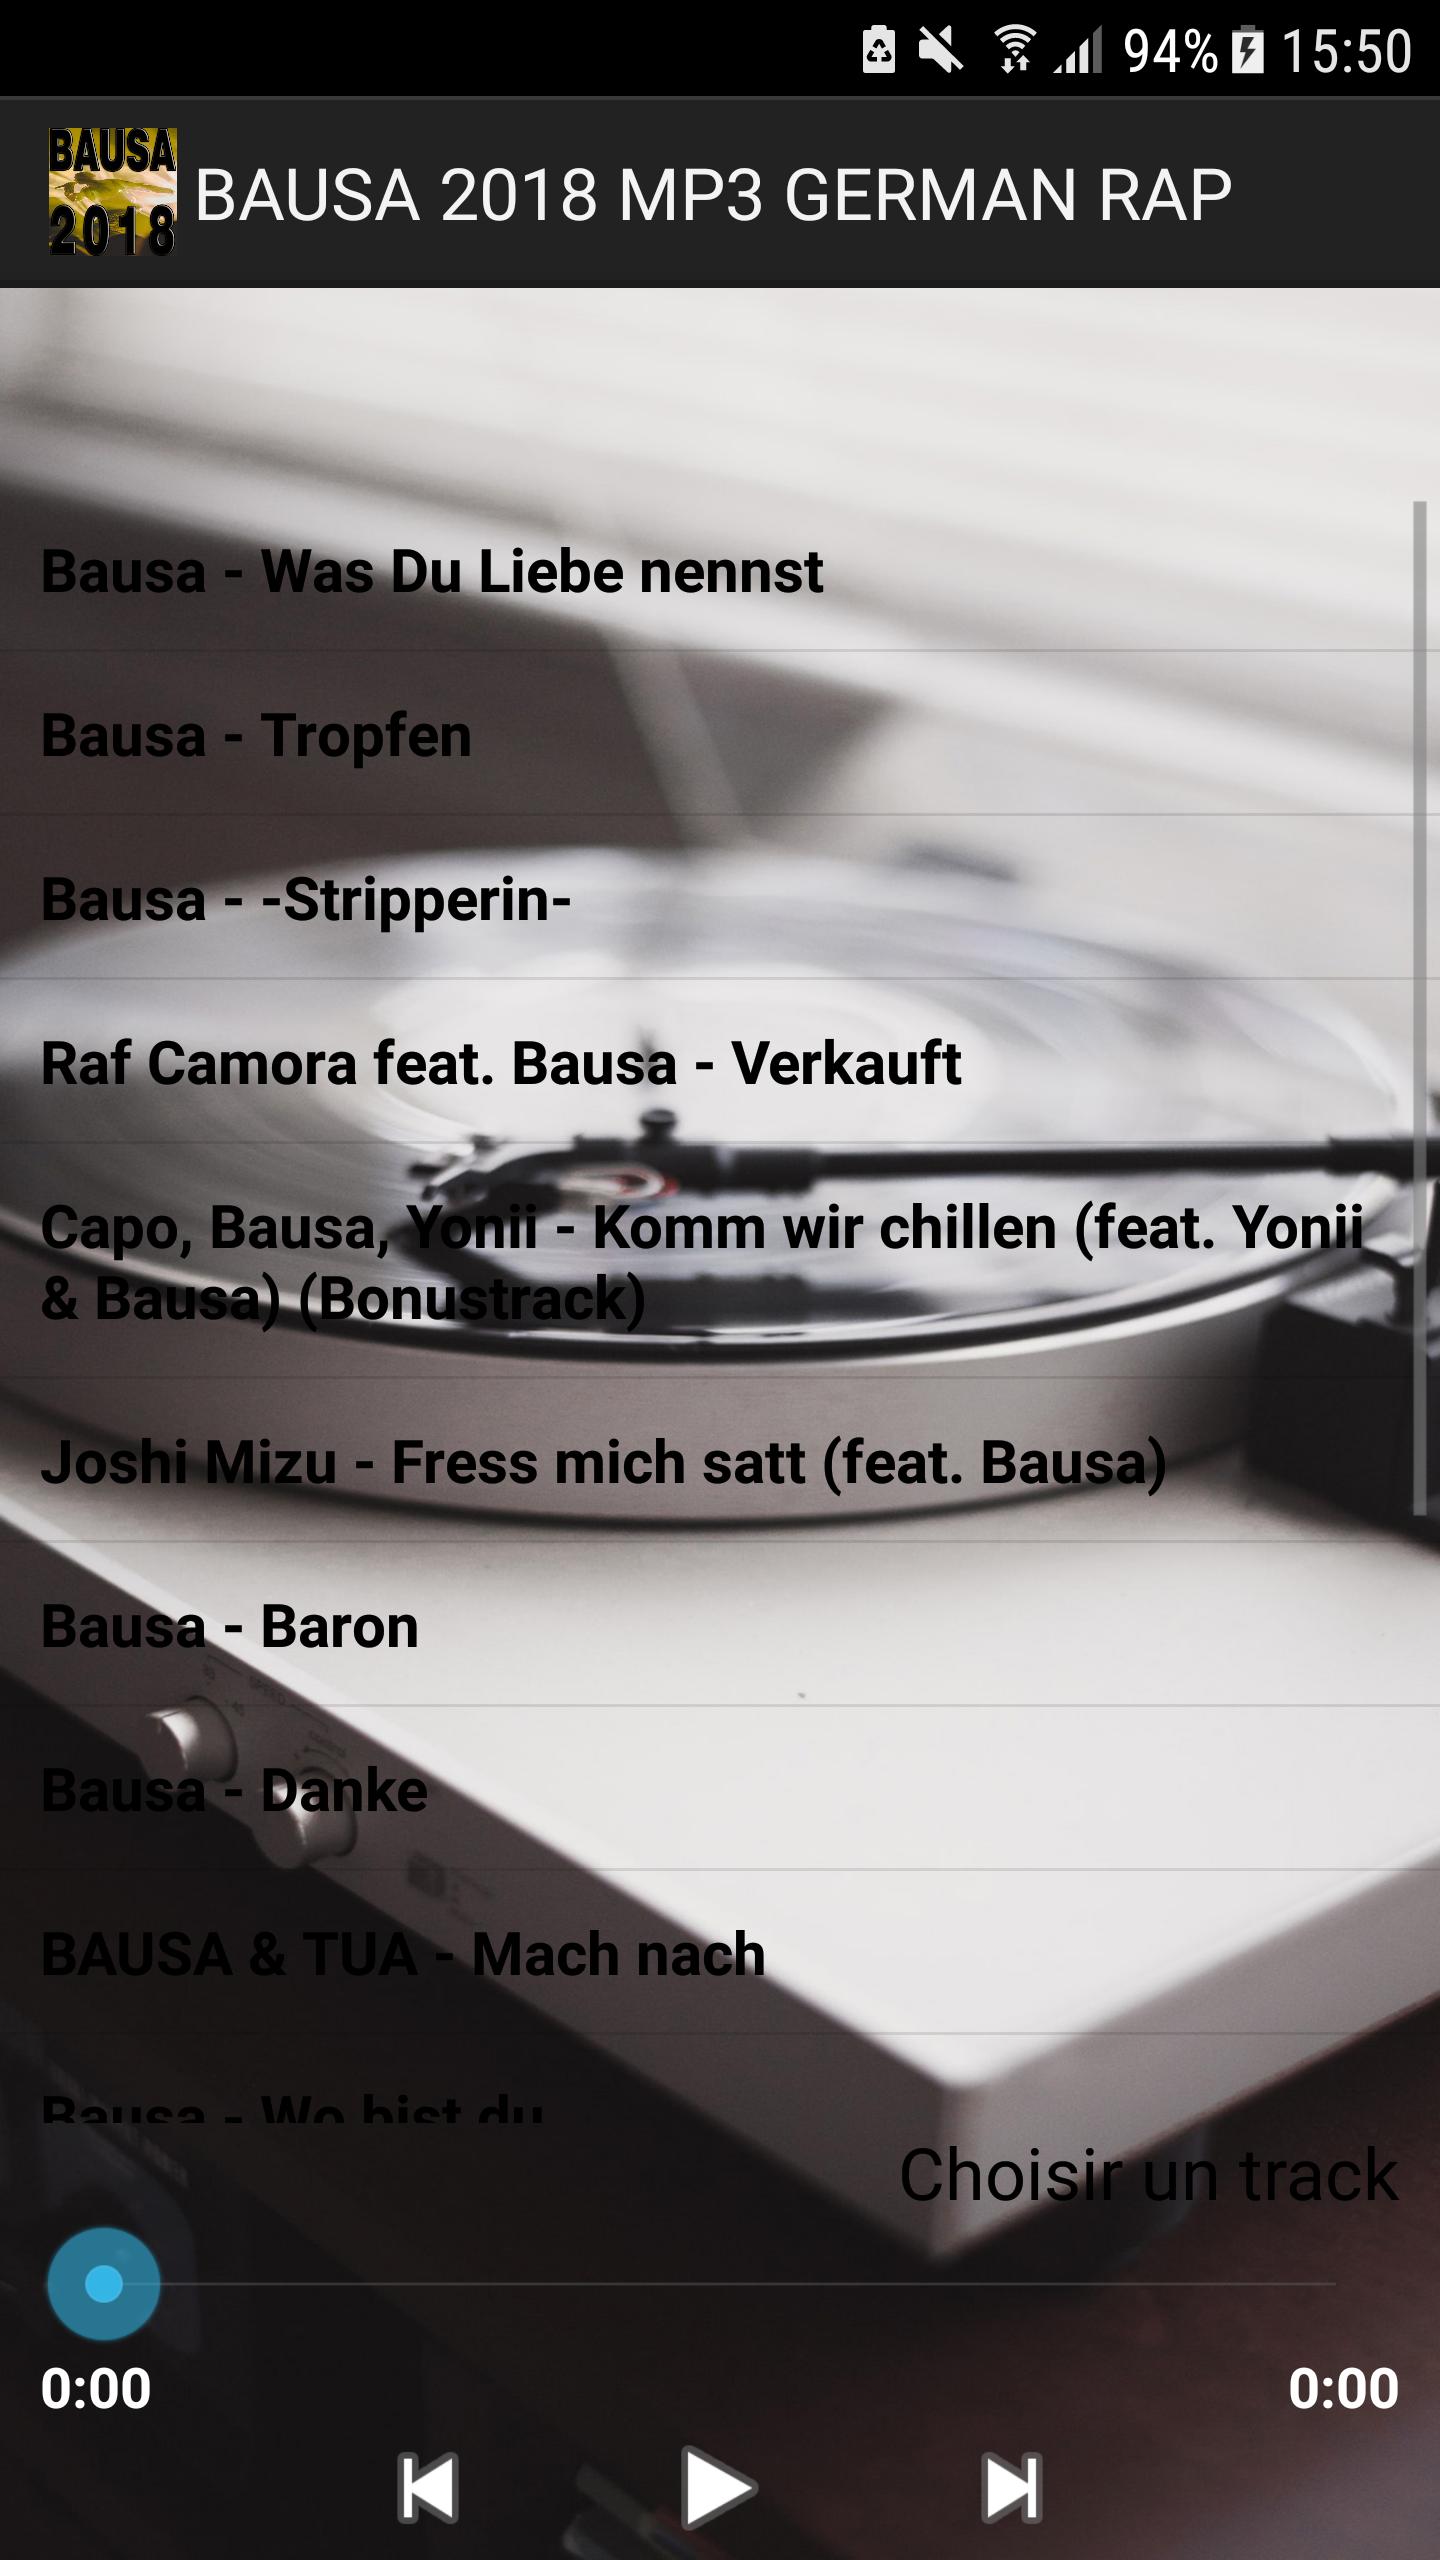 BAUSA 2018 MP3 GERMAN RAP for Android - APK Download